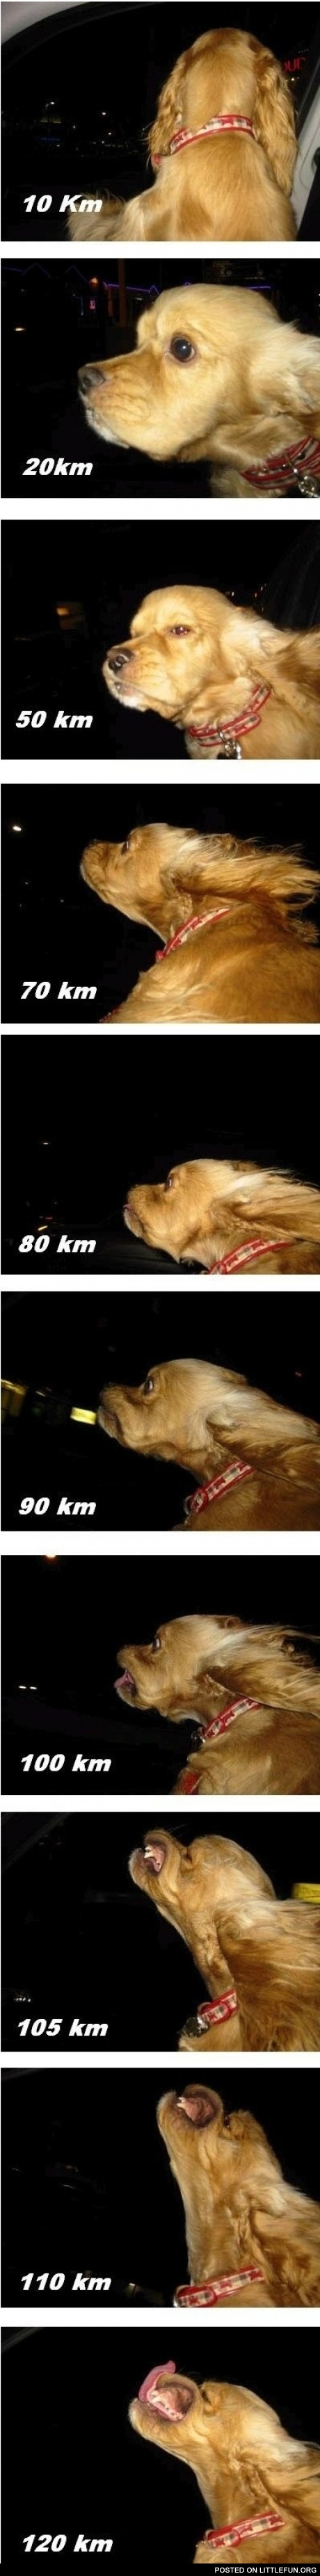 High speed dog